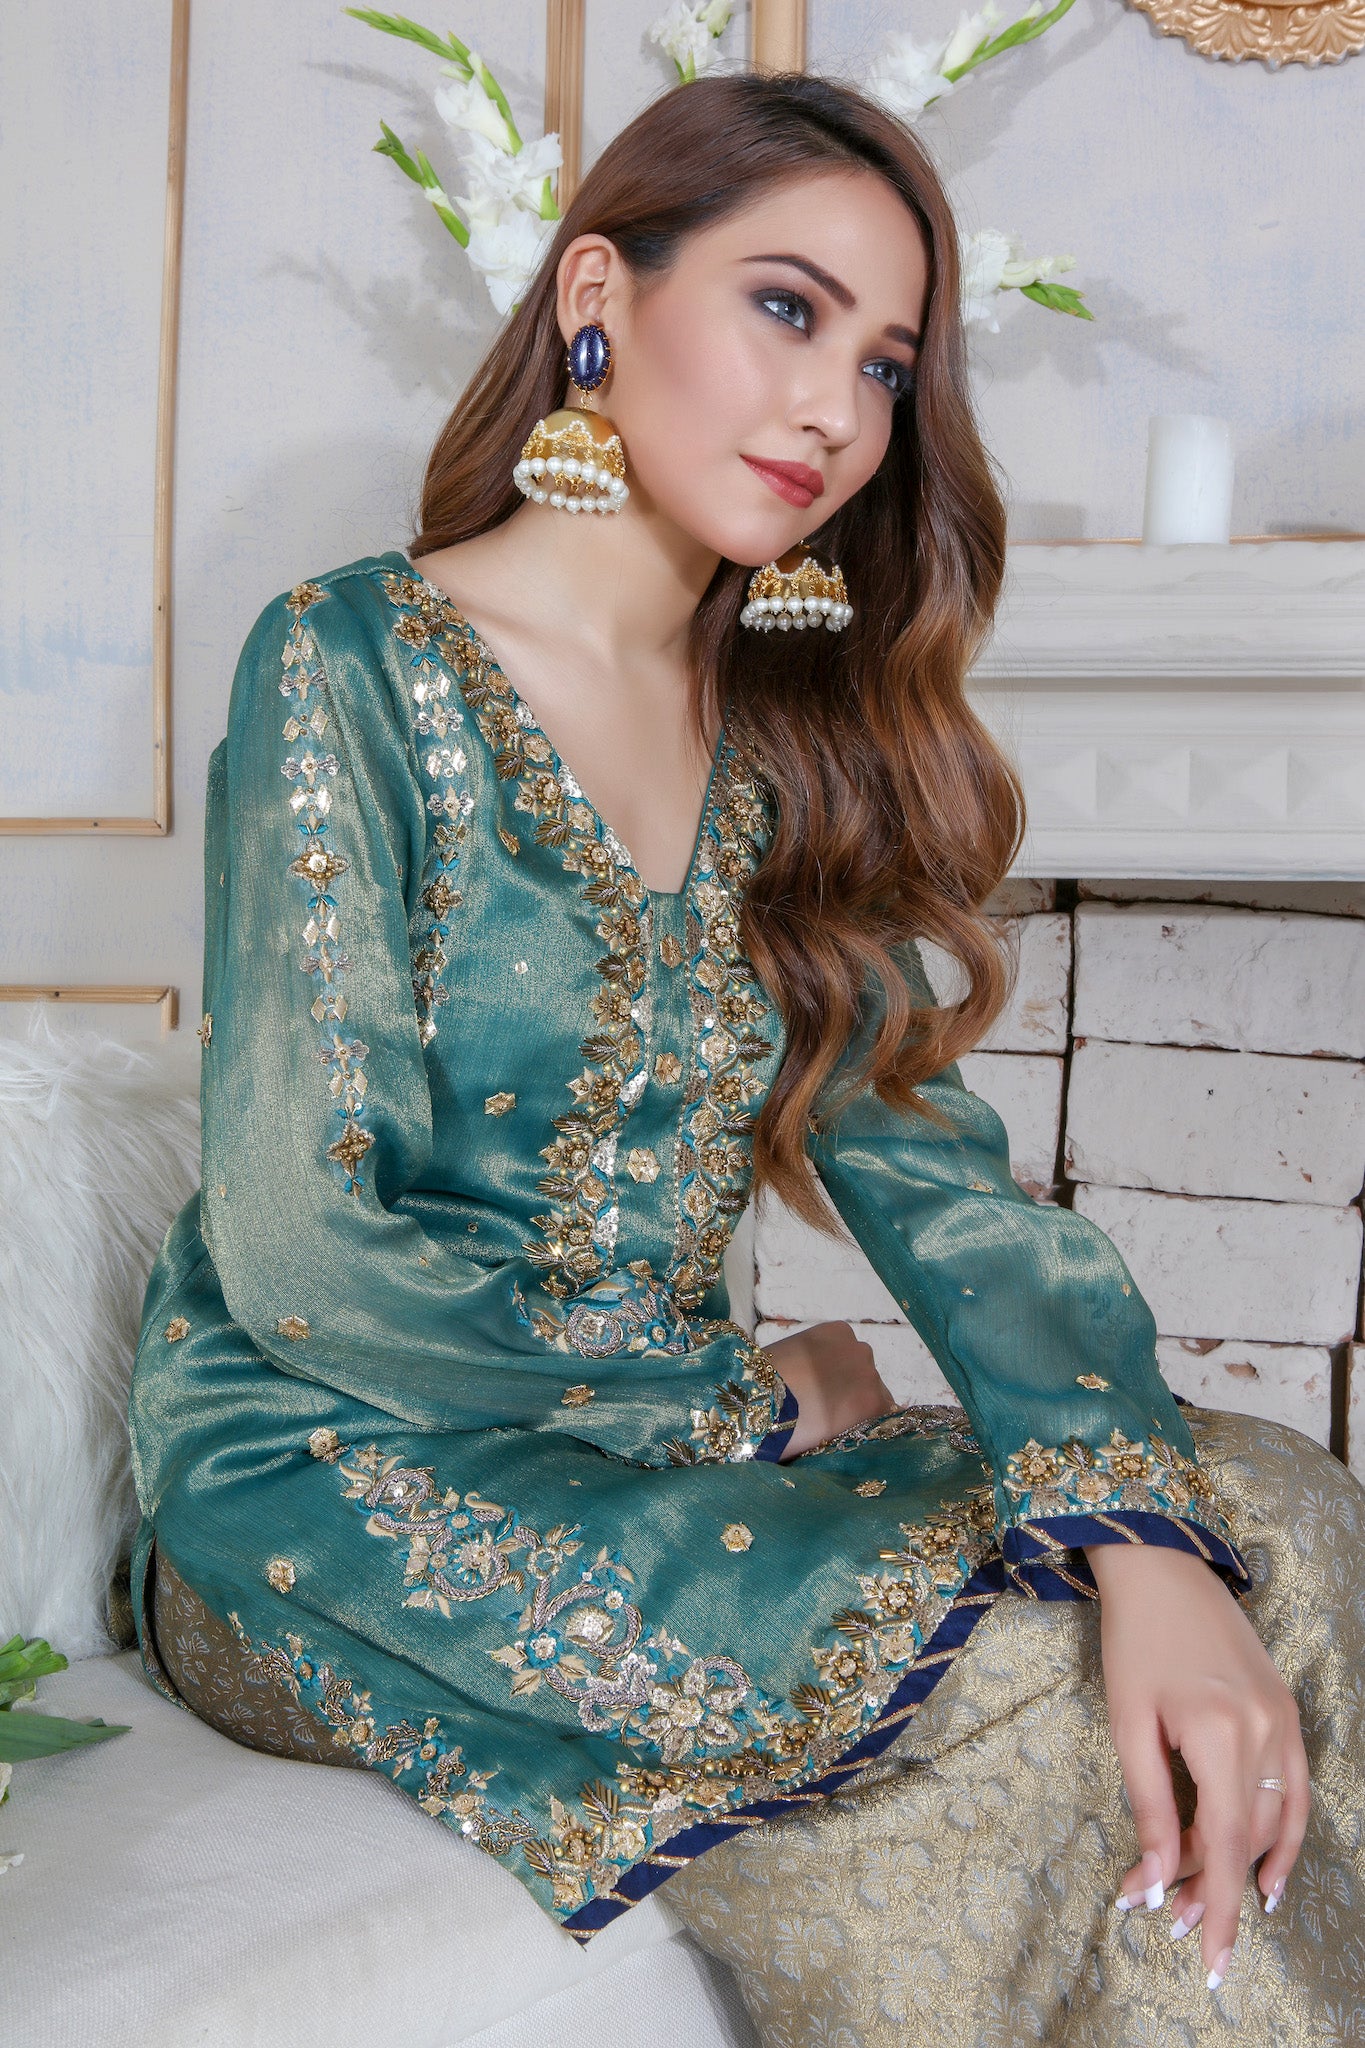 Metallic Green | Pakistani Designer Outfit | Sarosh Salman